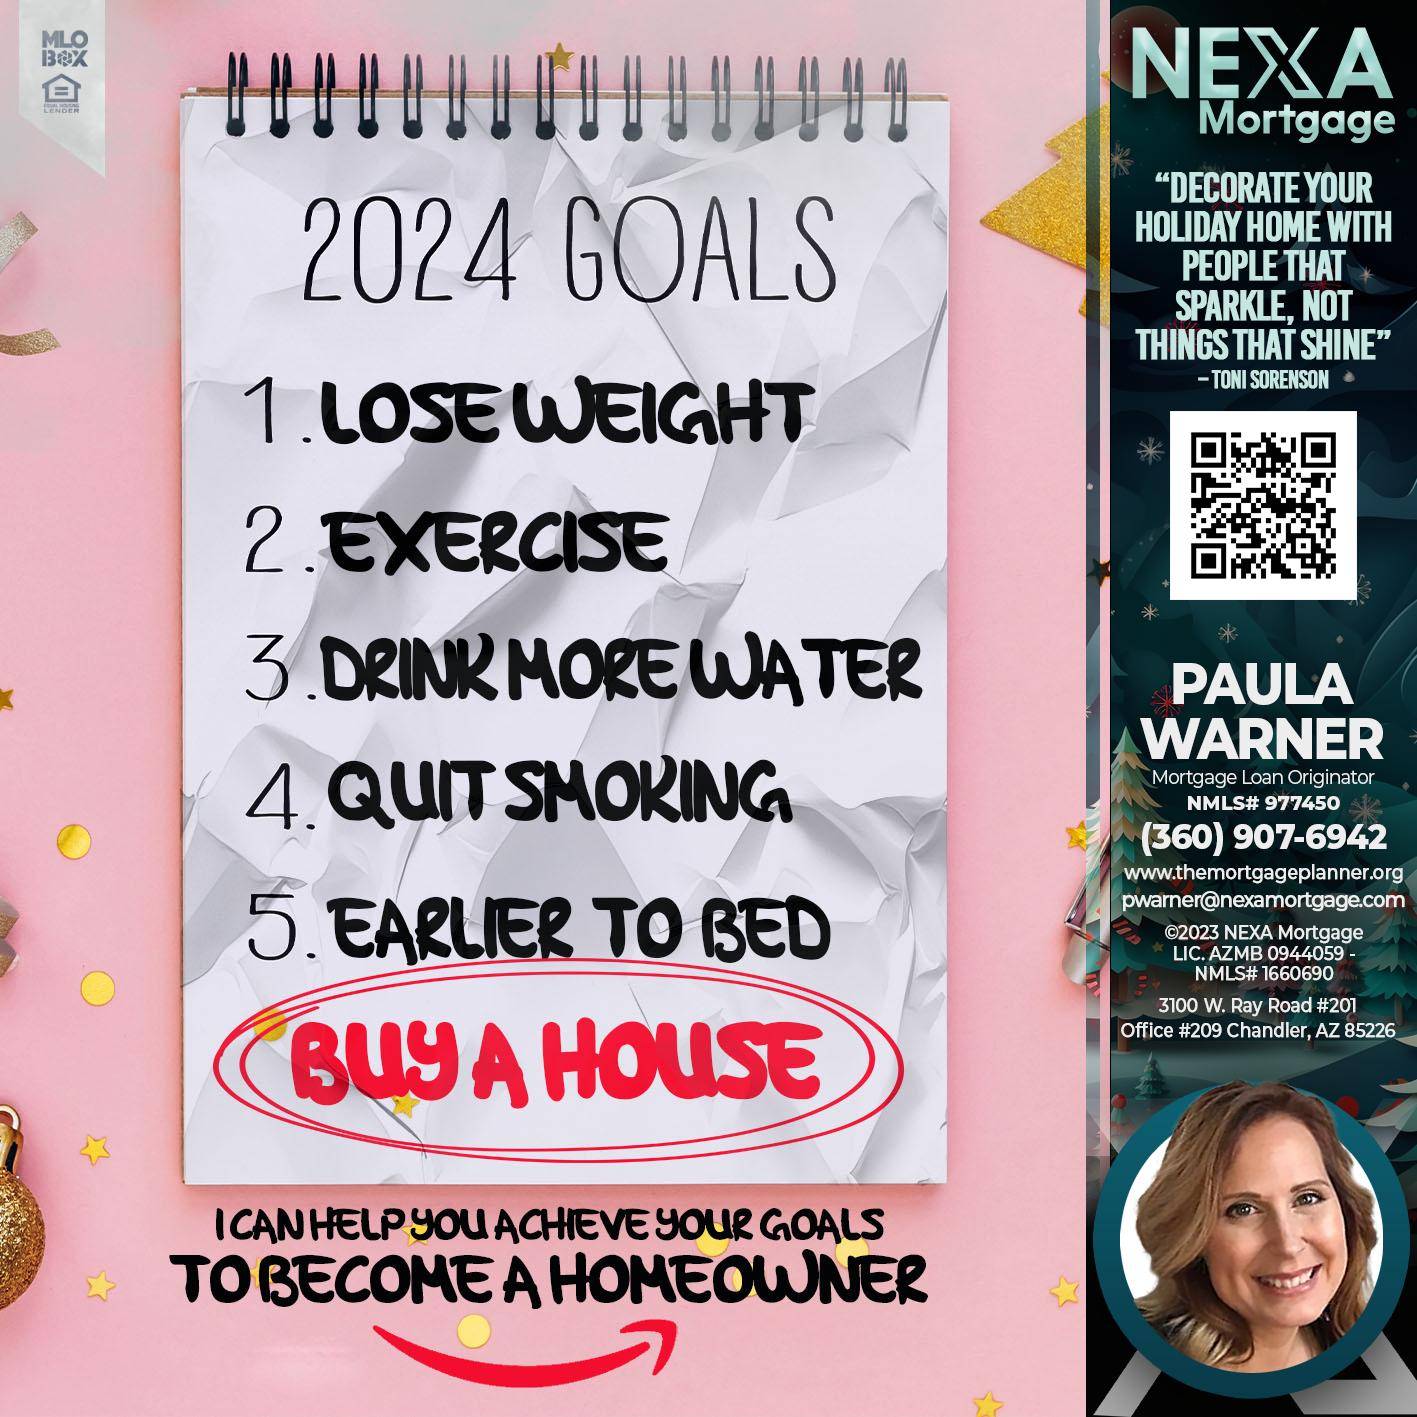 2024 GOALS - Paula Warner -Mortgage Loan Originator